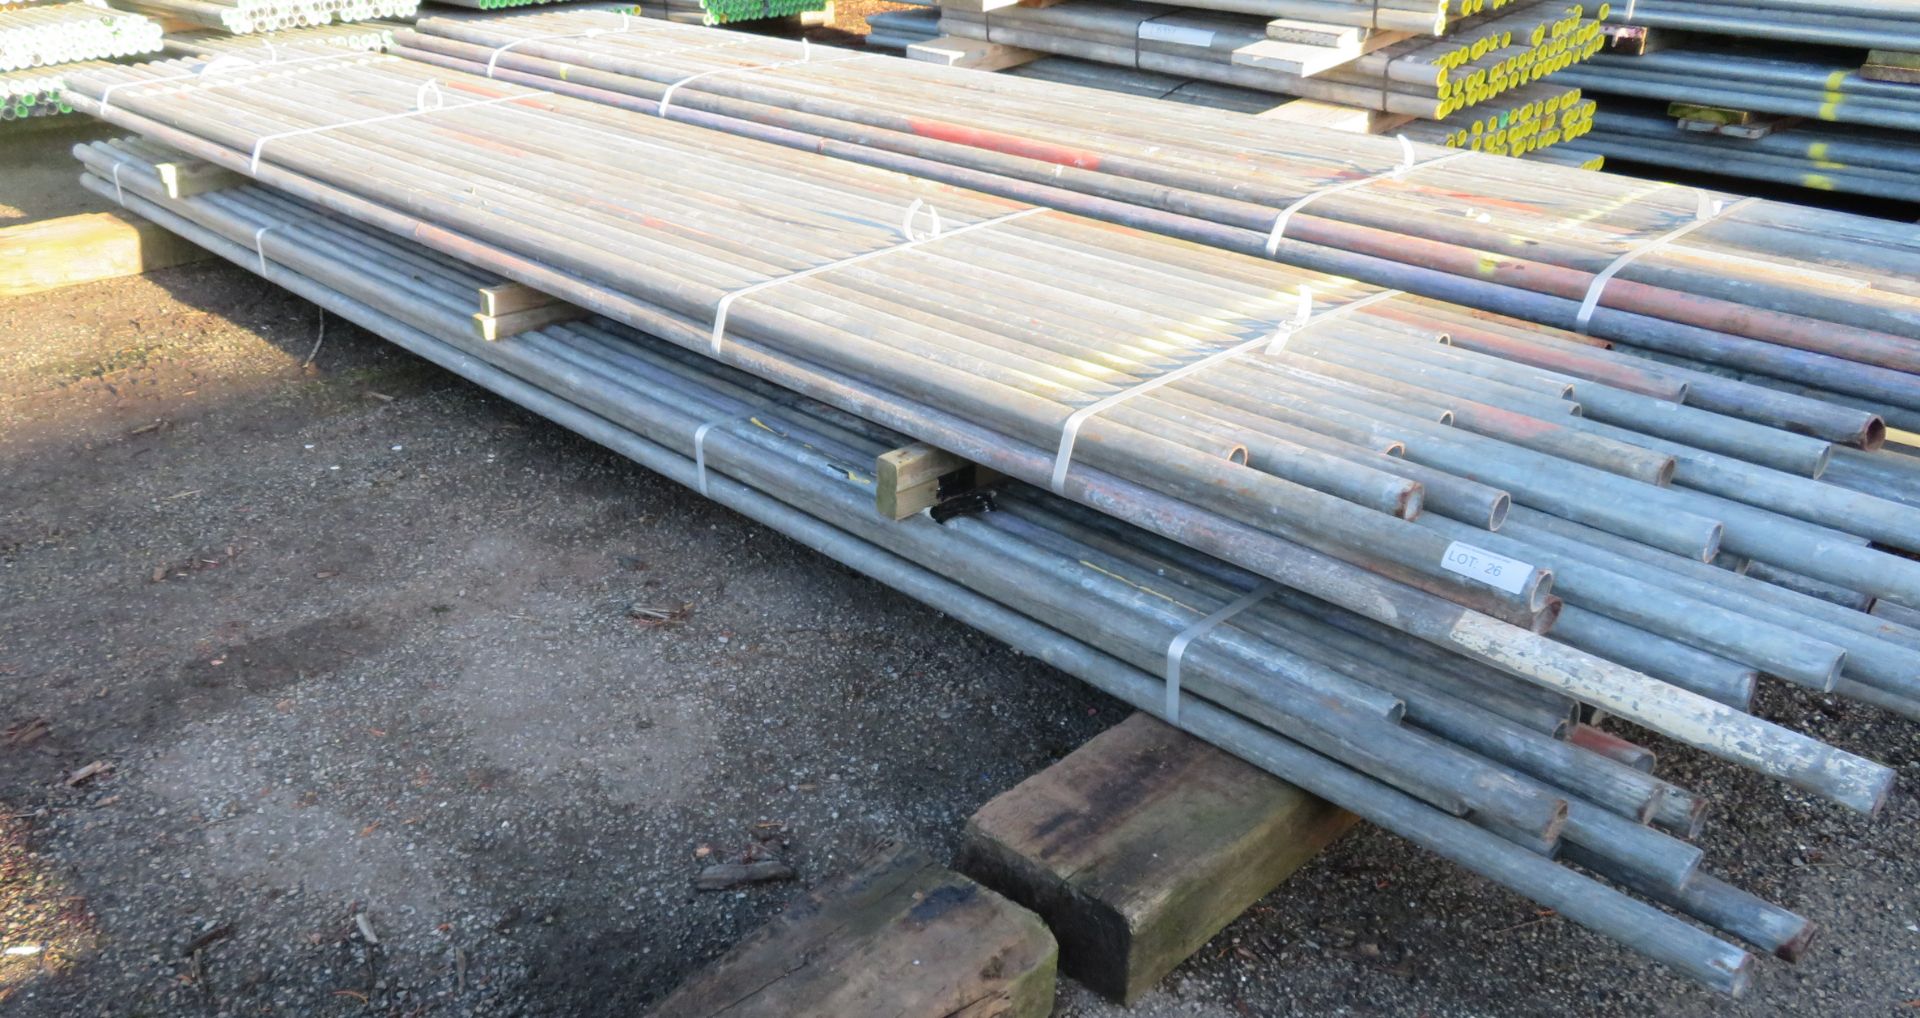 100x Various Length Galvanised Steel Scaffolding Poles. Lengths Range Between 15.5ft - 13ft. - Image 2 of 5